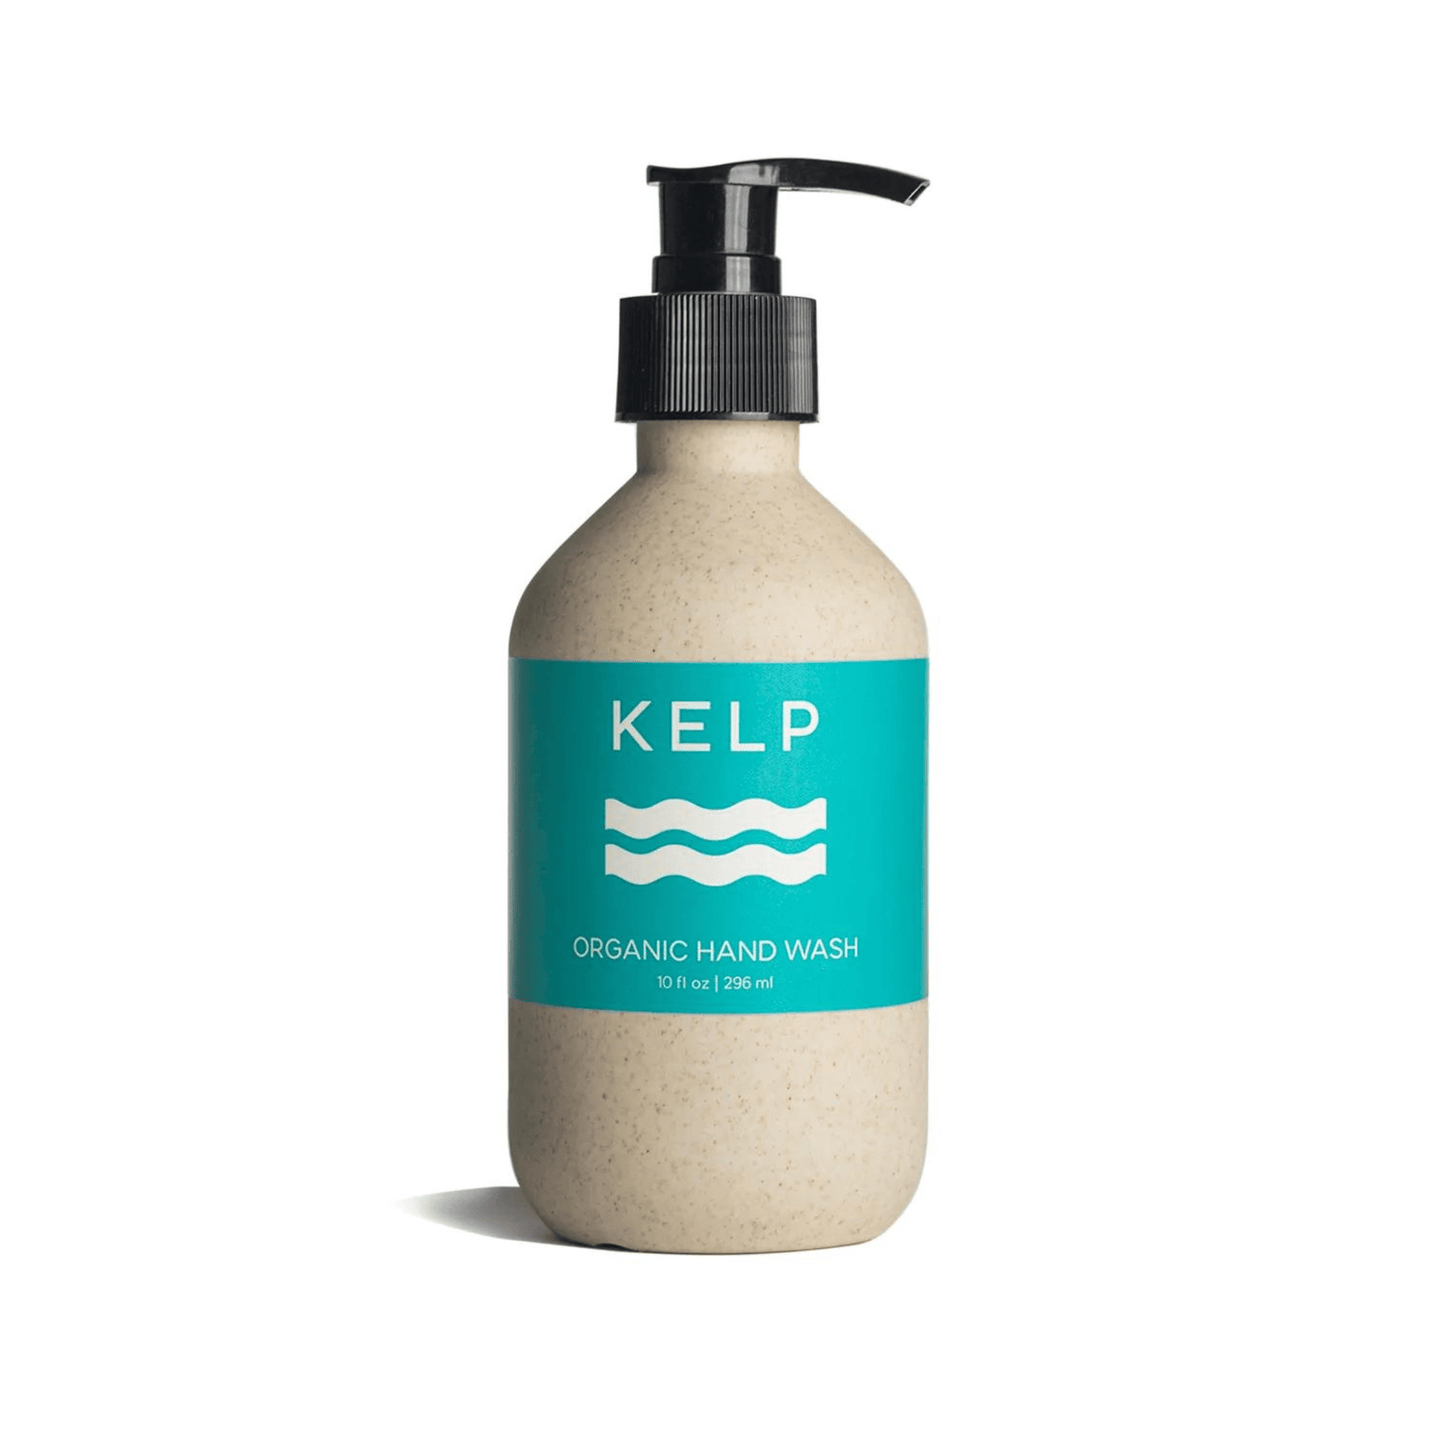 Primary Image of Iceland Kelp Hand Wash